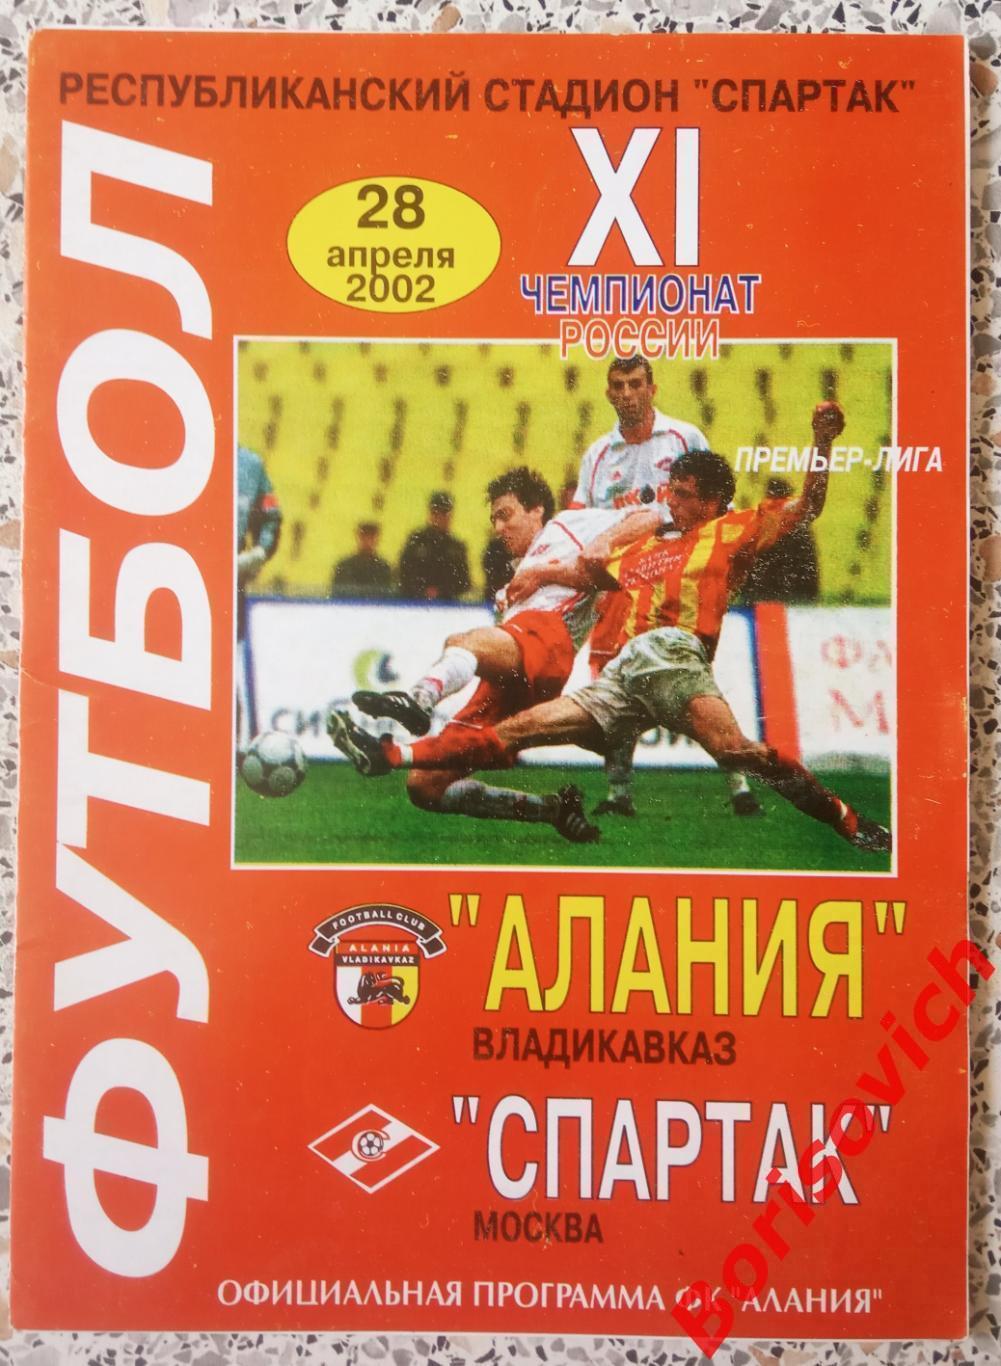 Алания Владикавказ - Спартак Москва 28-04-2002